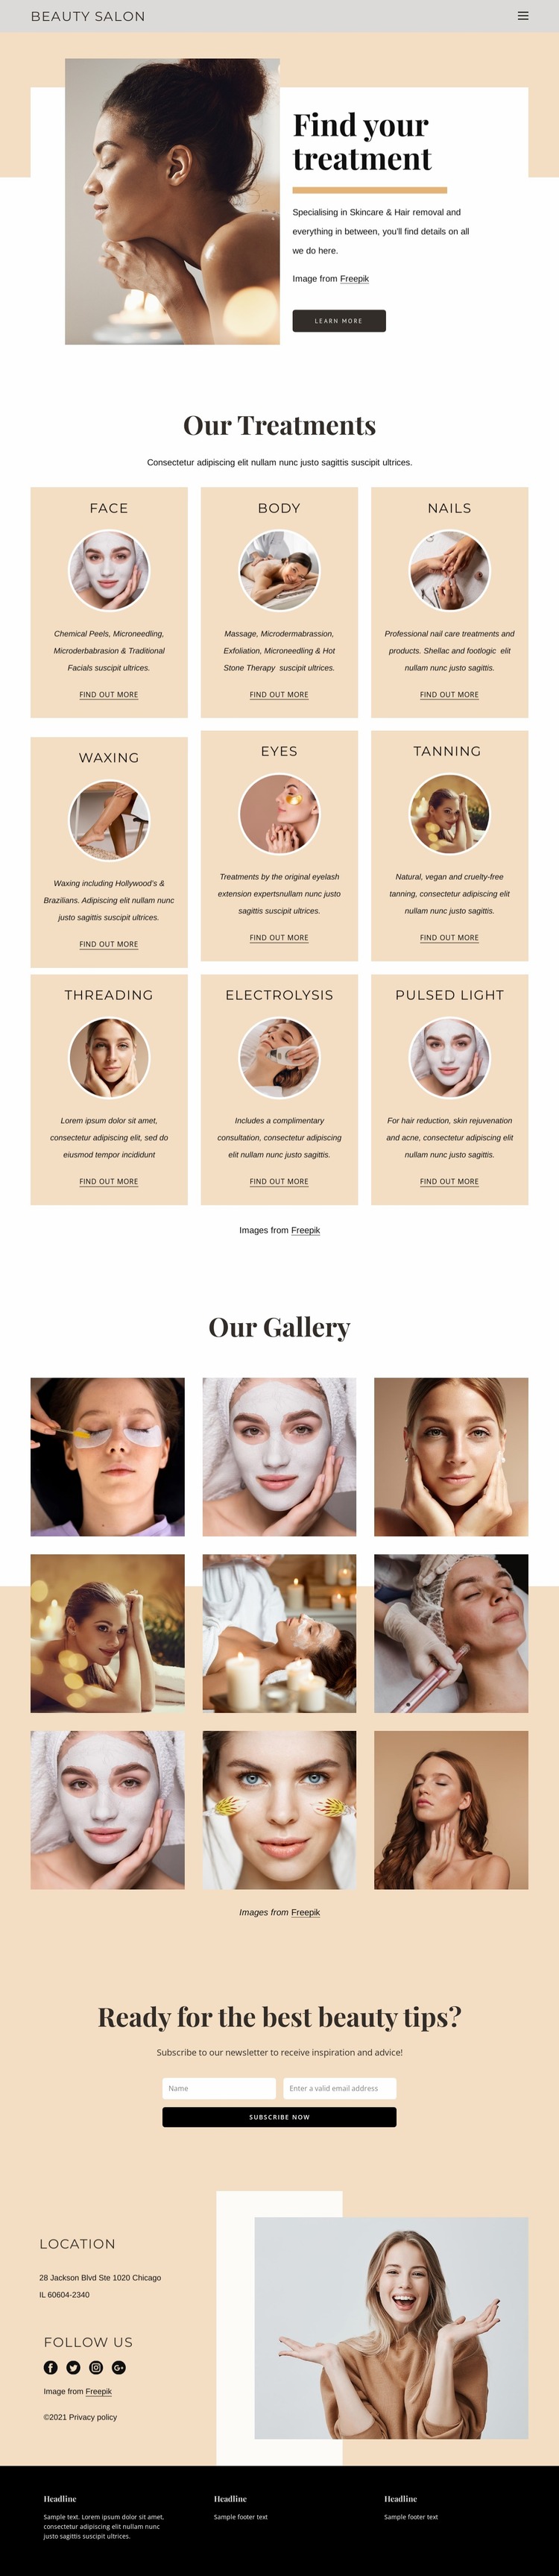 Professional beauty treatments Website Mockup